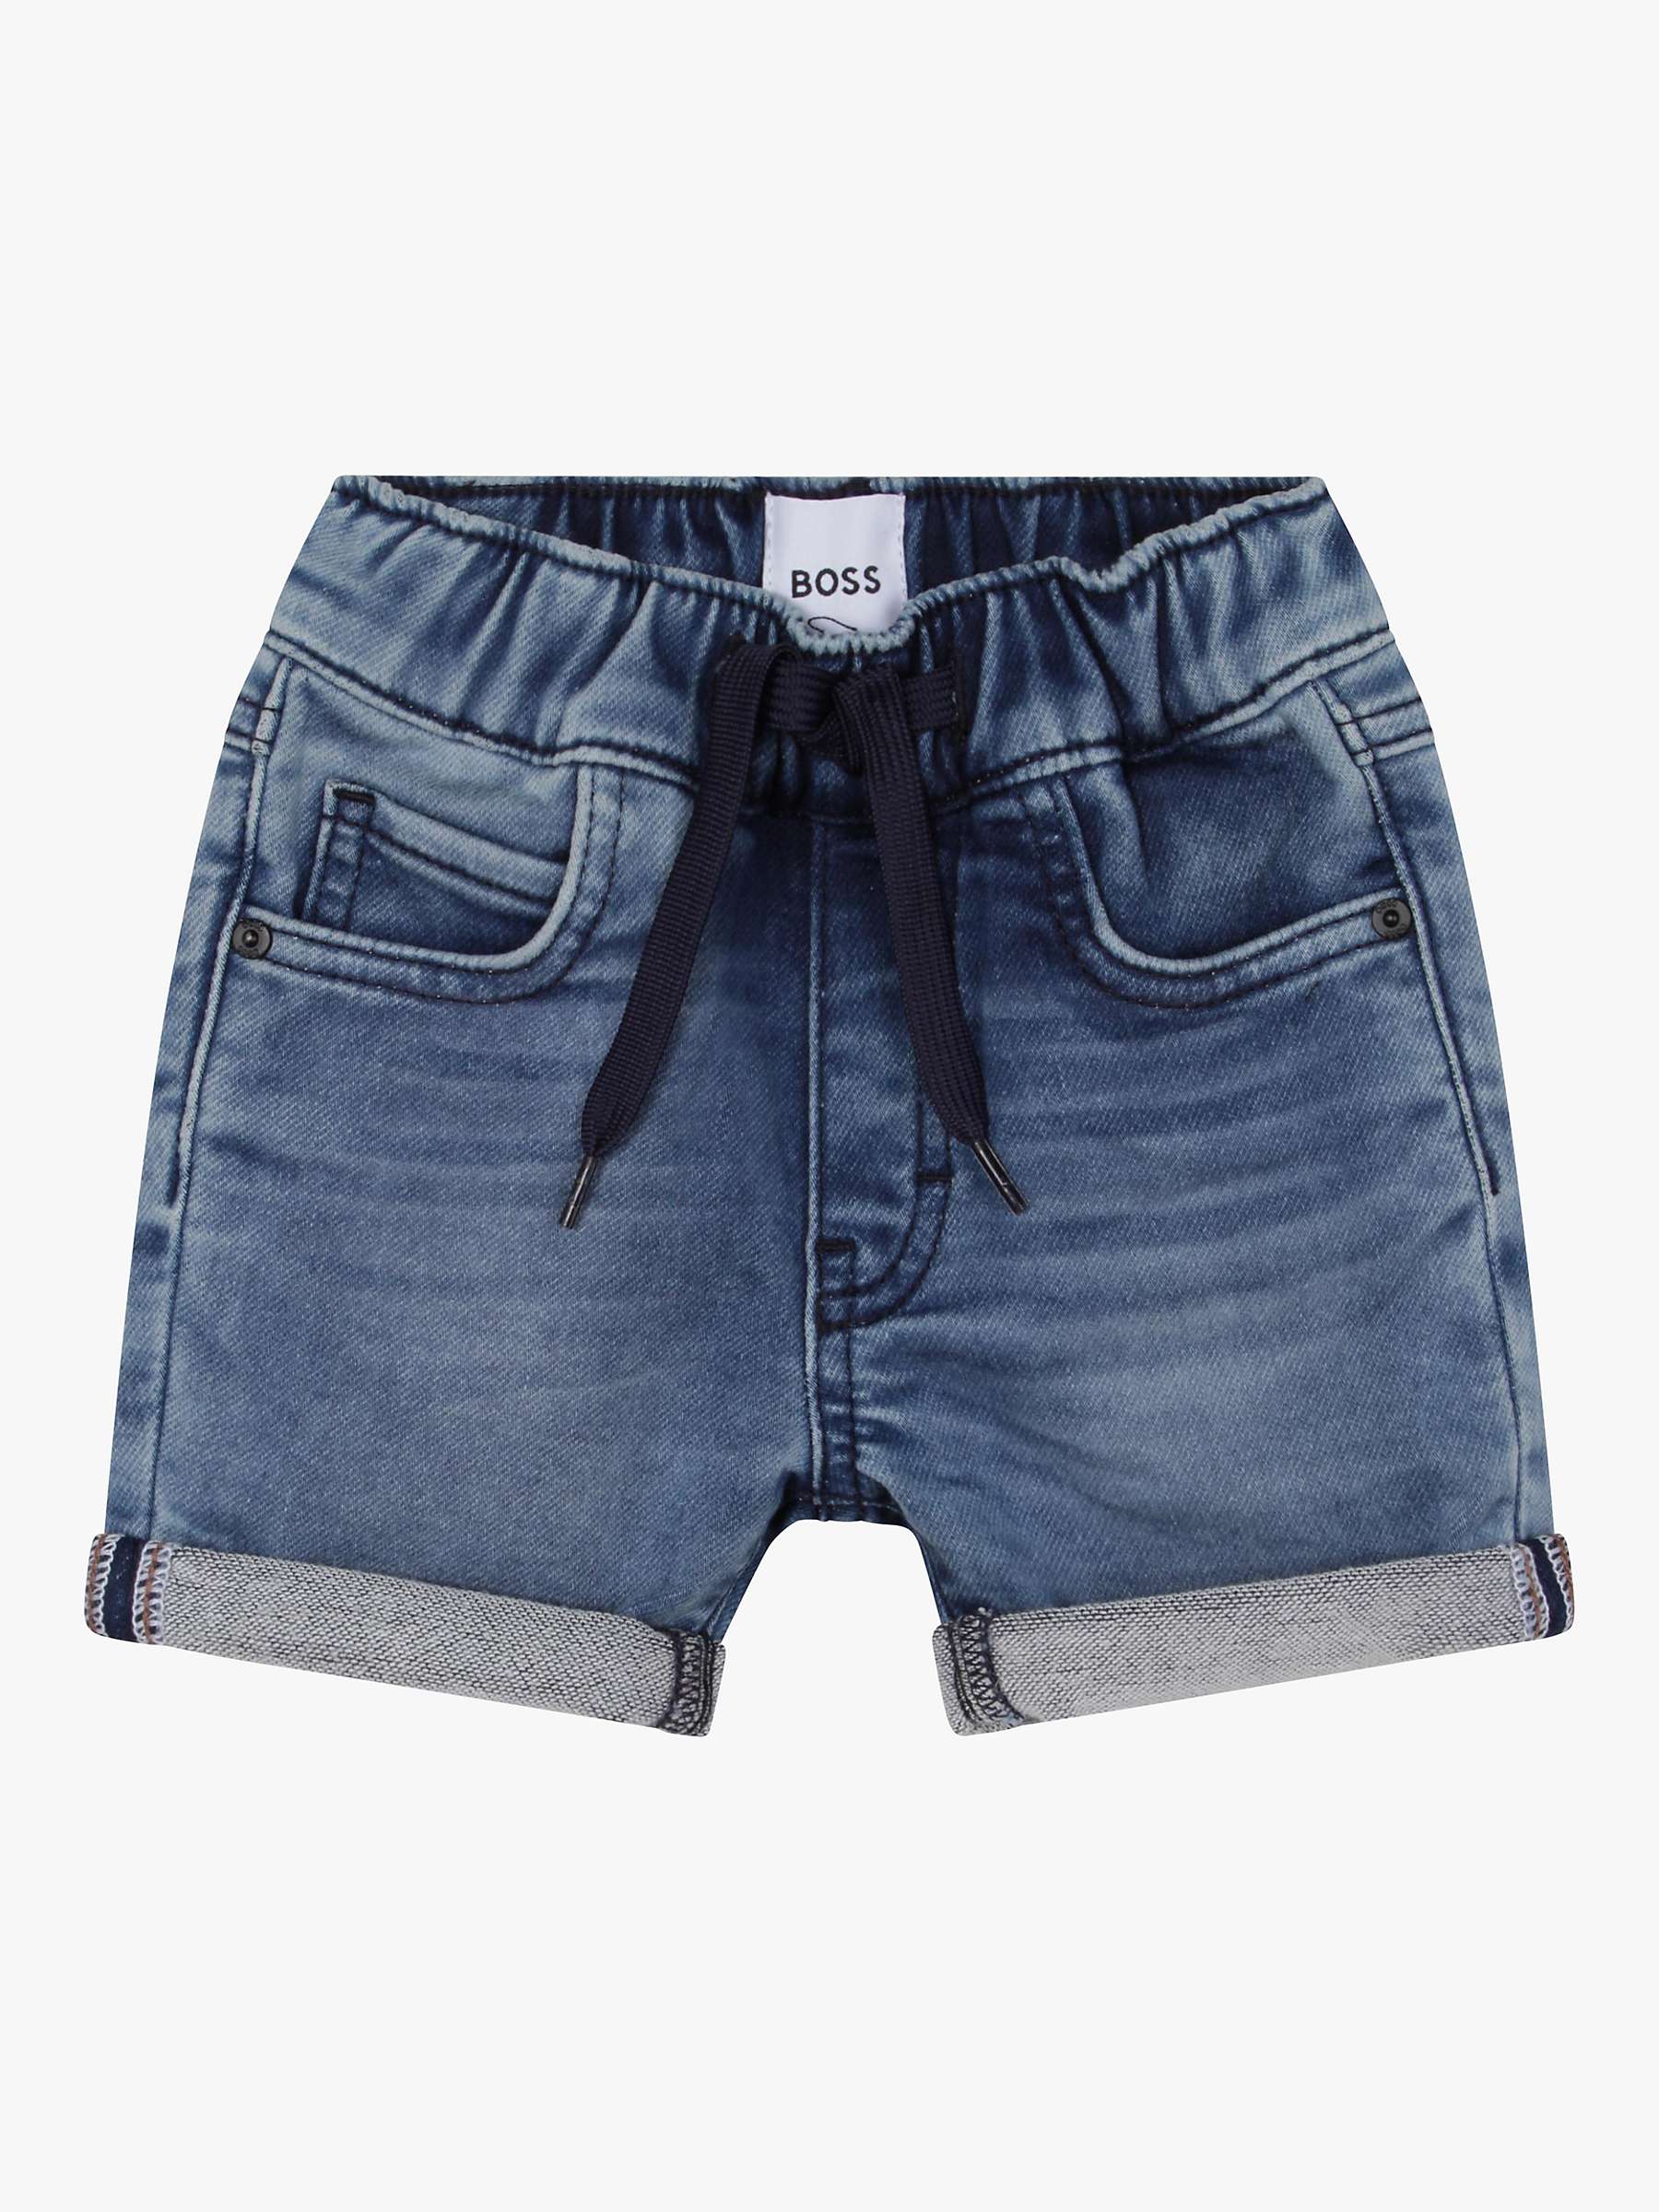 Buy HUGO BOSS Baby Denim Shorts, Blue Online at johnlewis.com